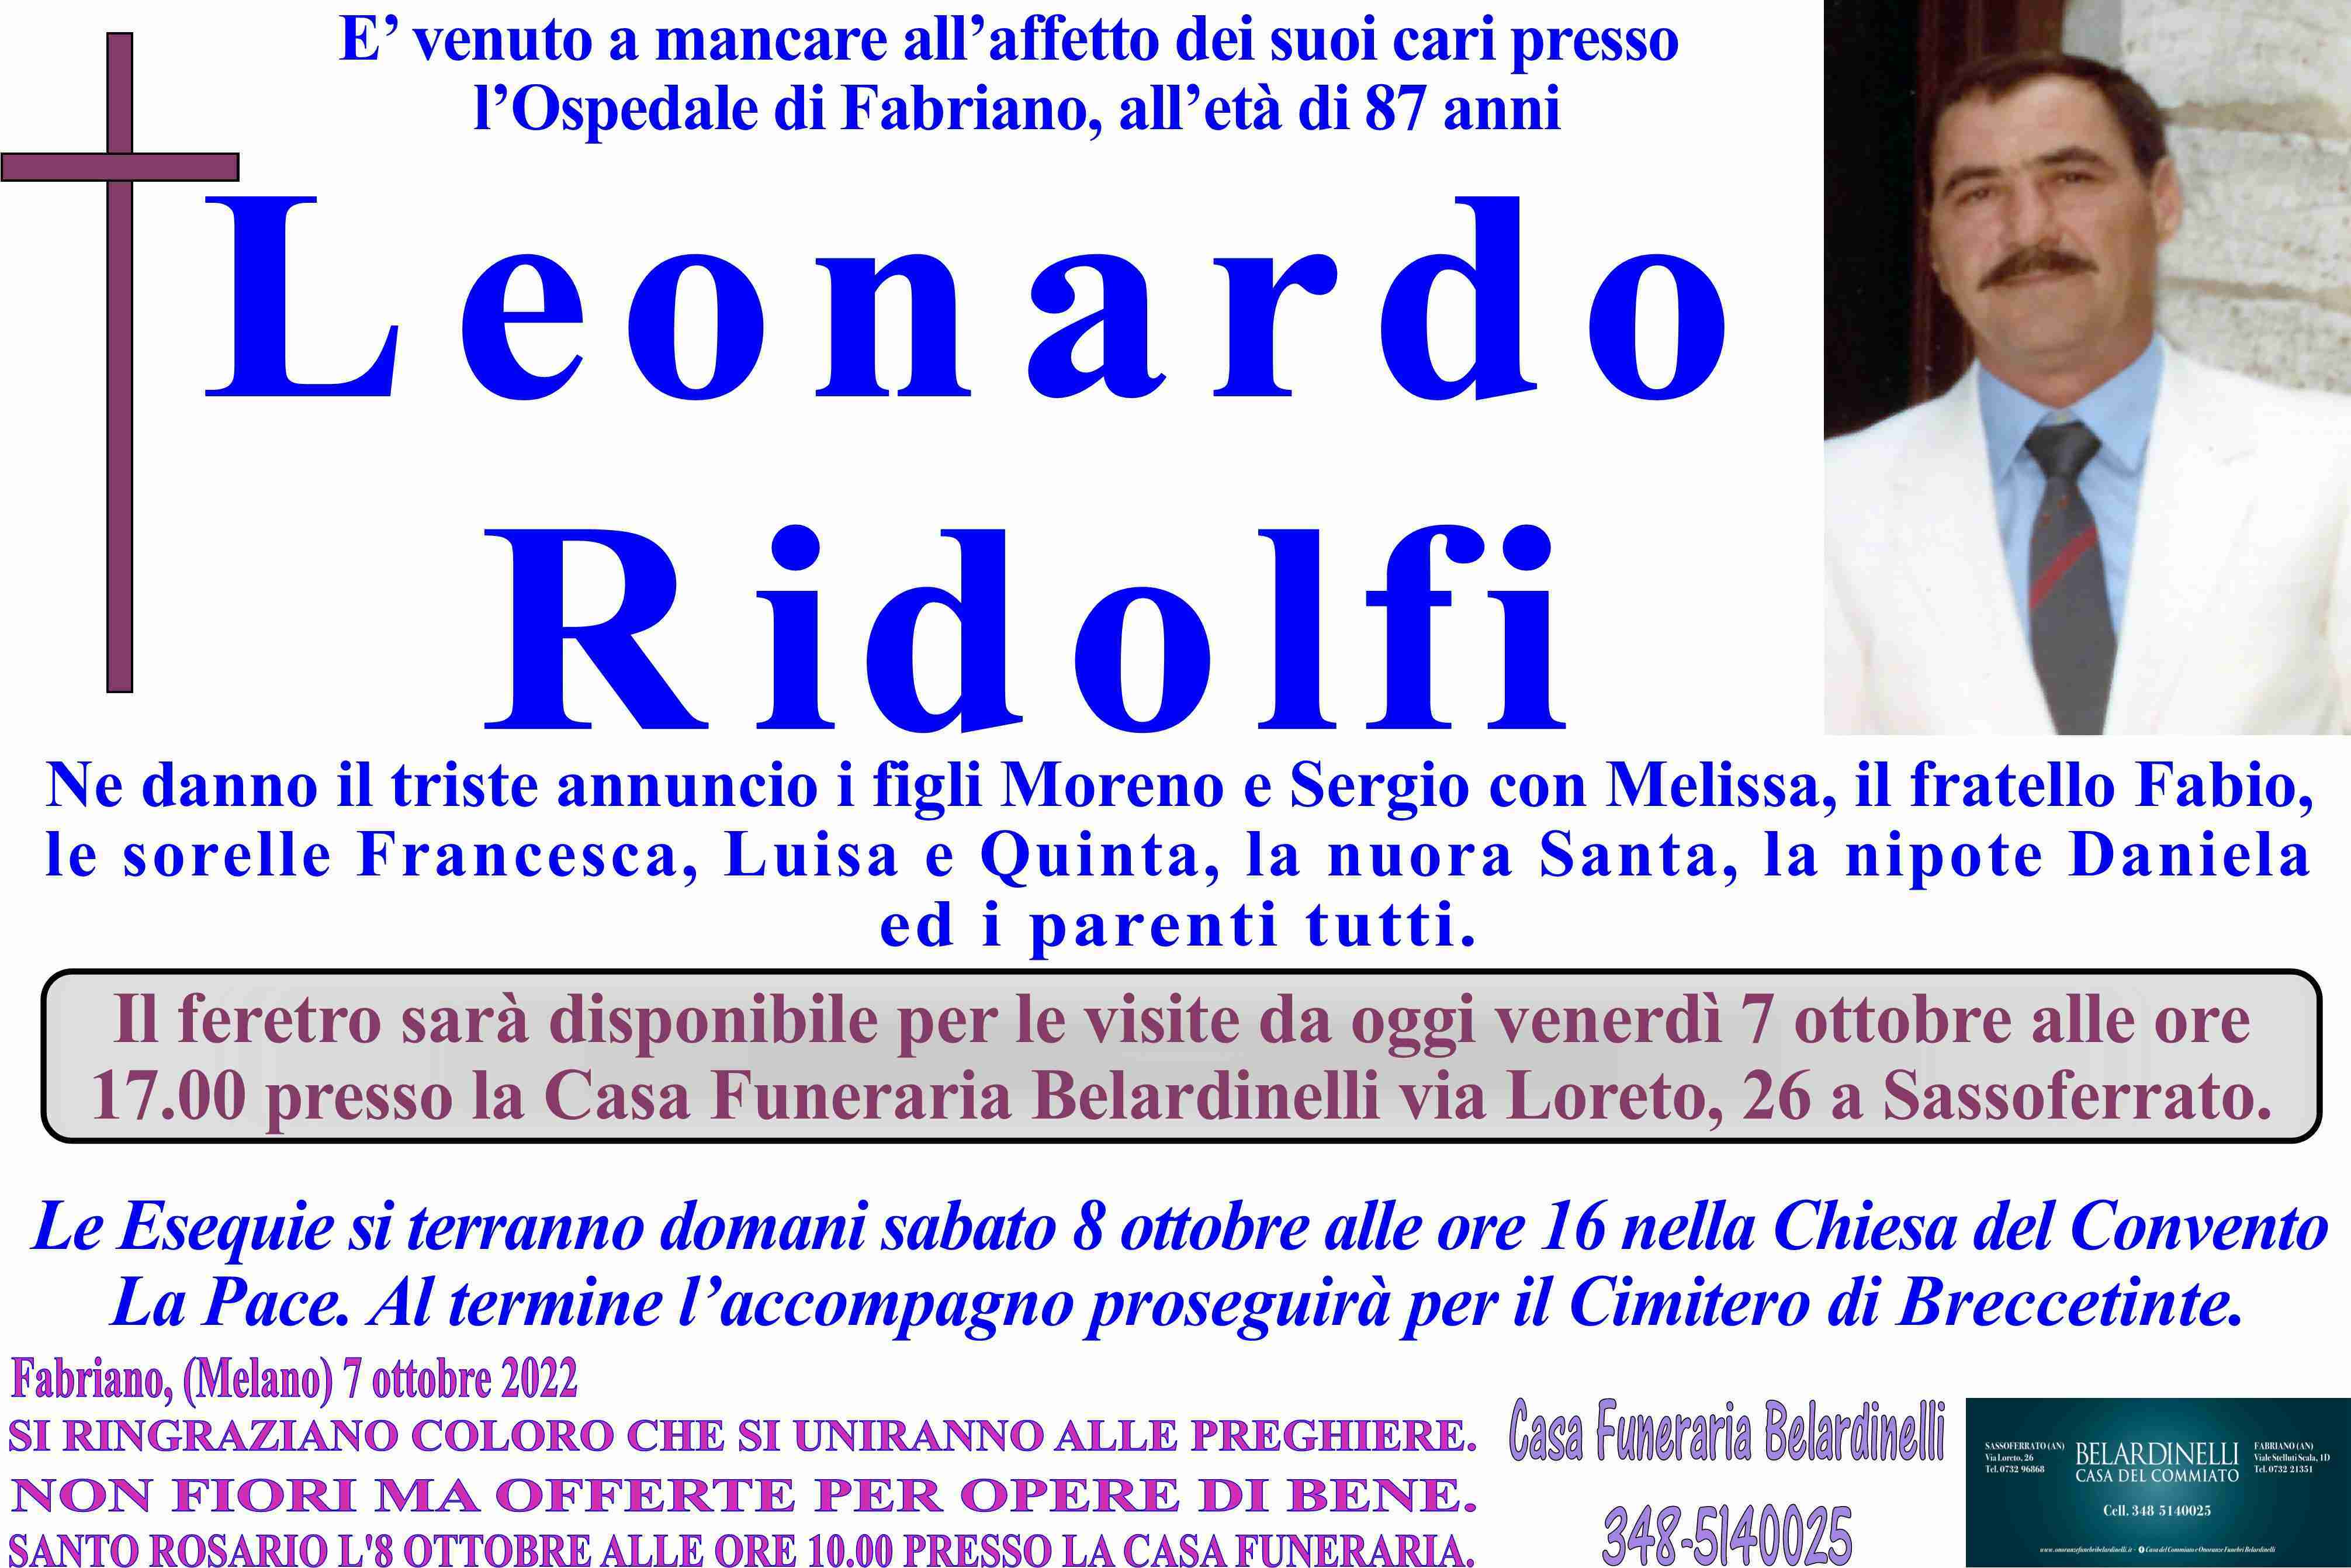 Leonardo Ridolfi